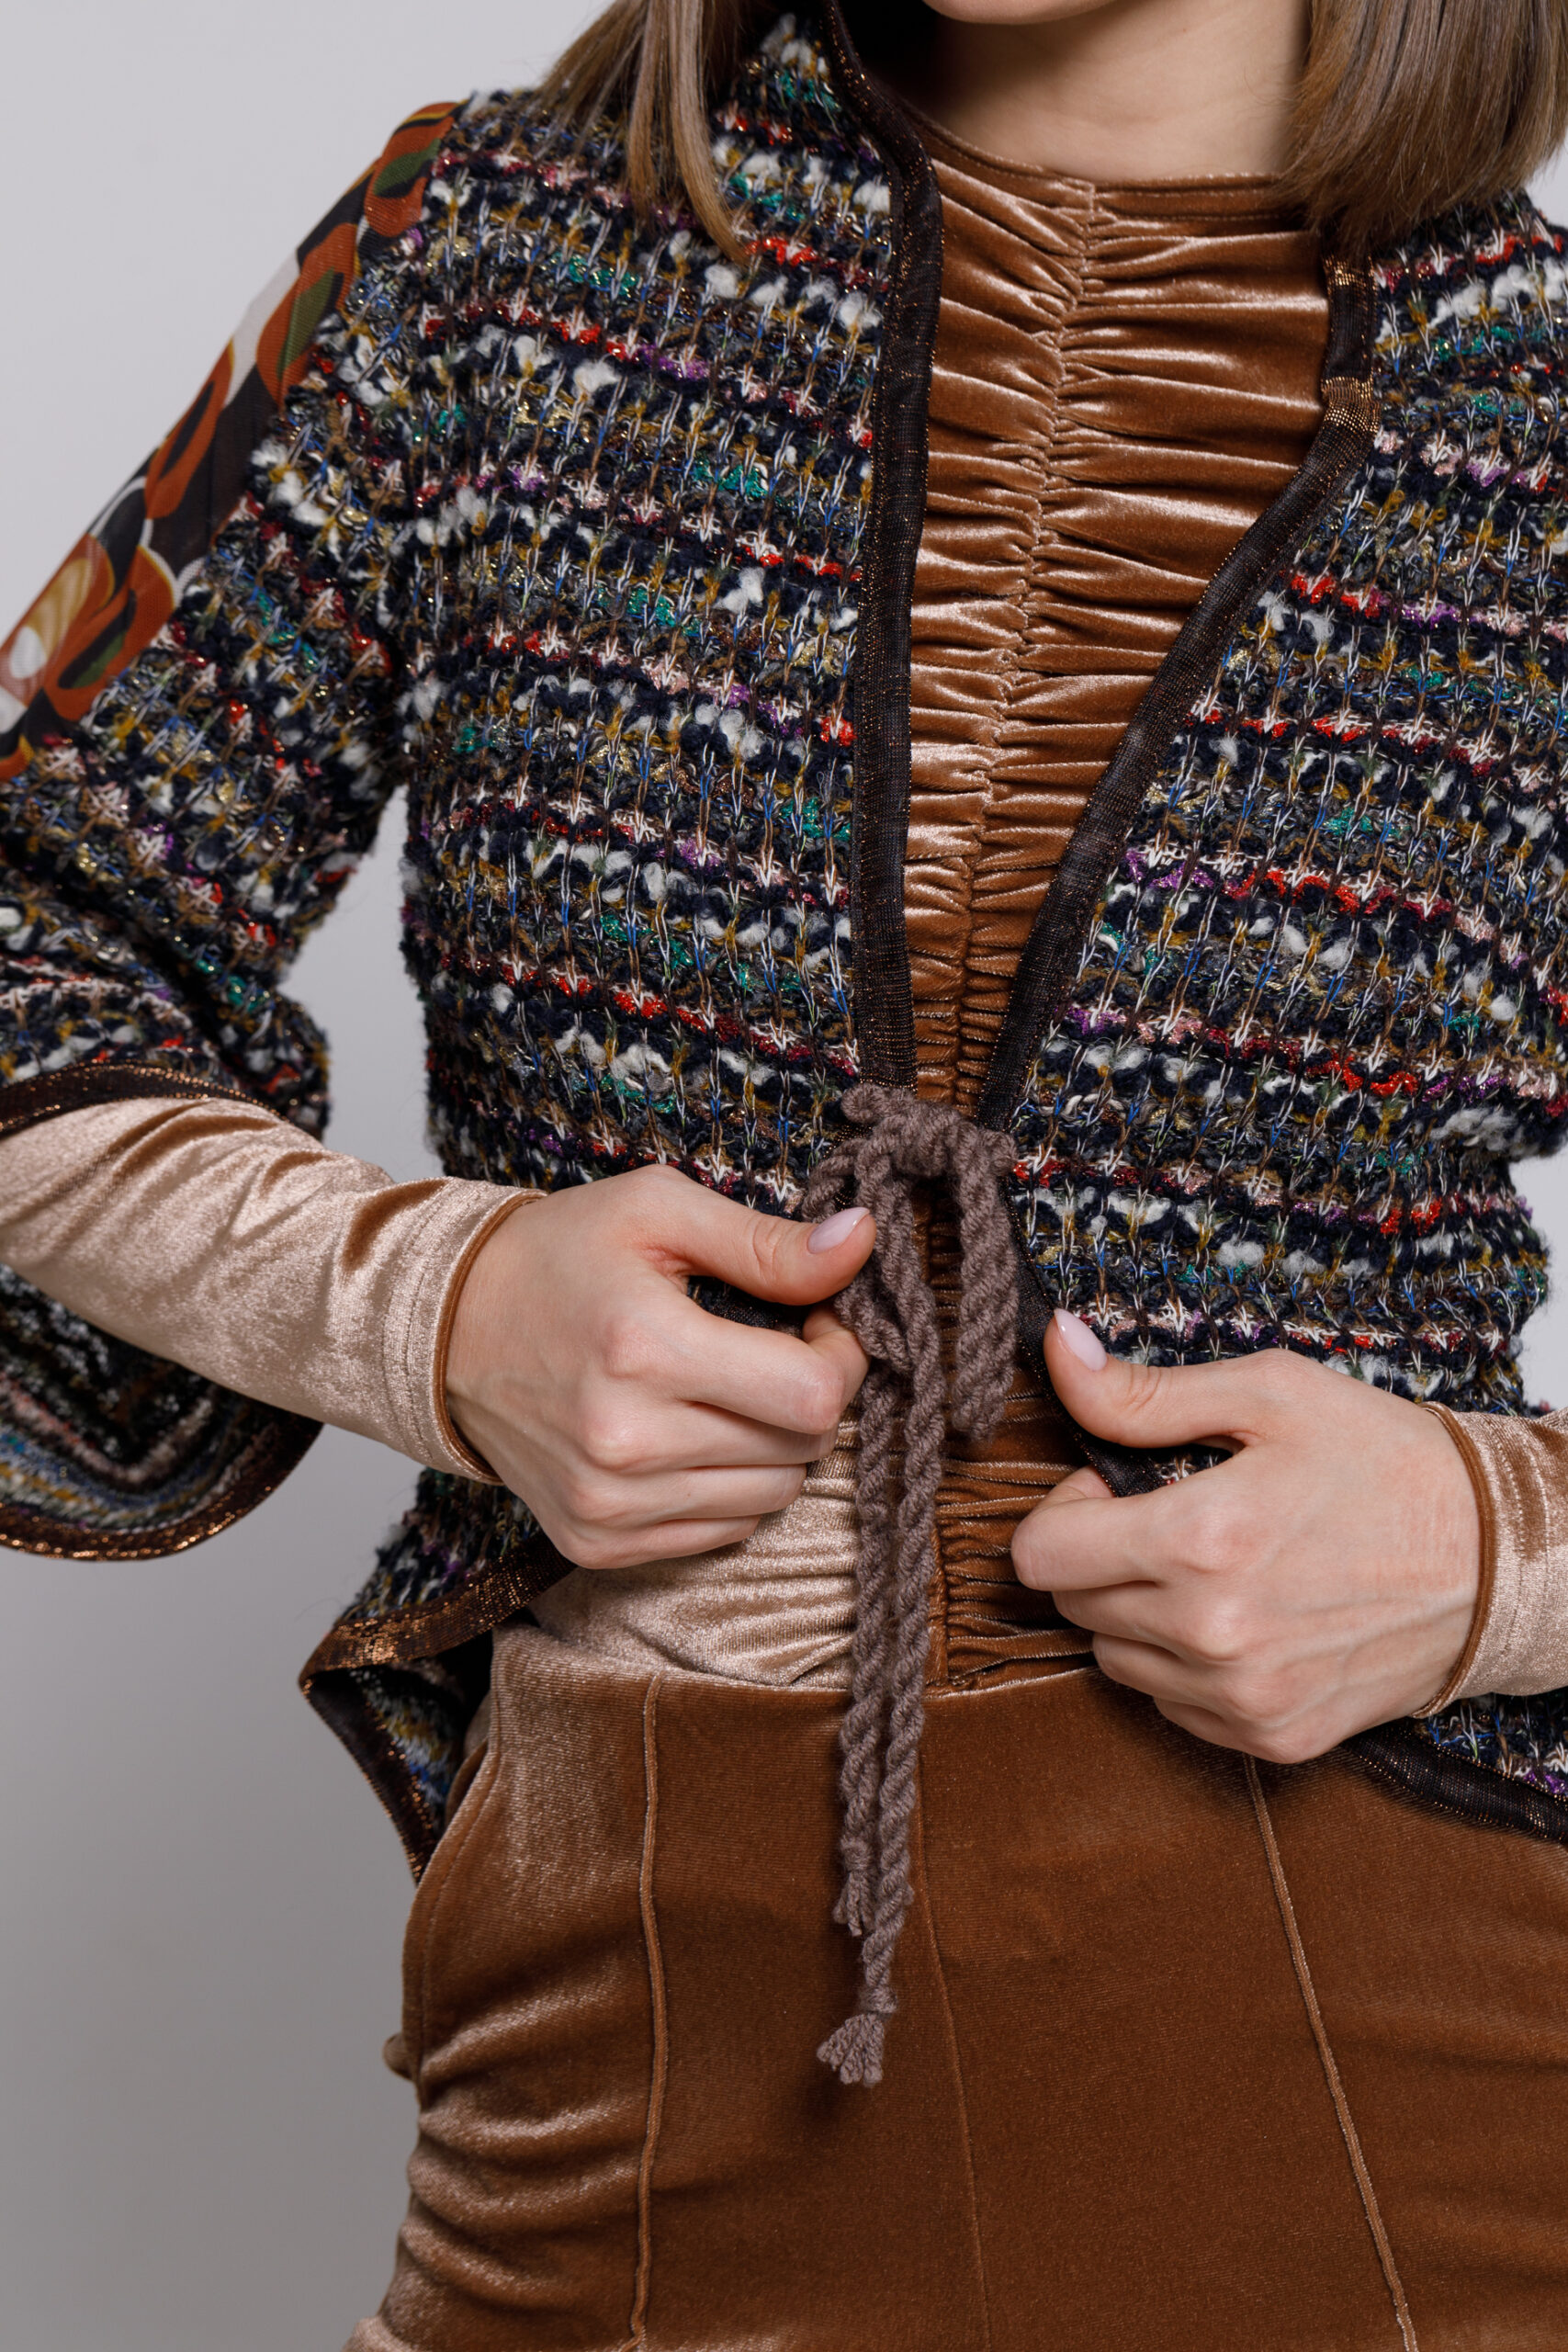 Jacheta OSIRIS aramiu cu motive geometrice tricot multicolor. Materiale naturale, design unicat, cu broderie si aplicatii handmade